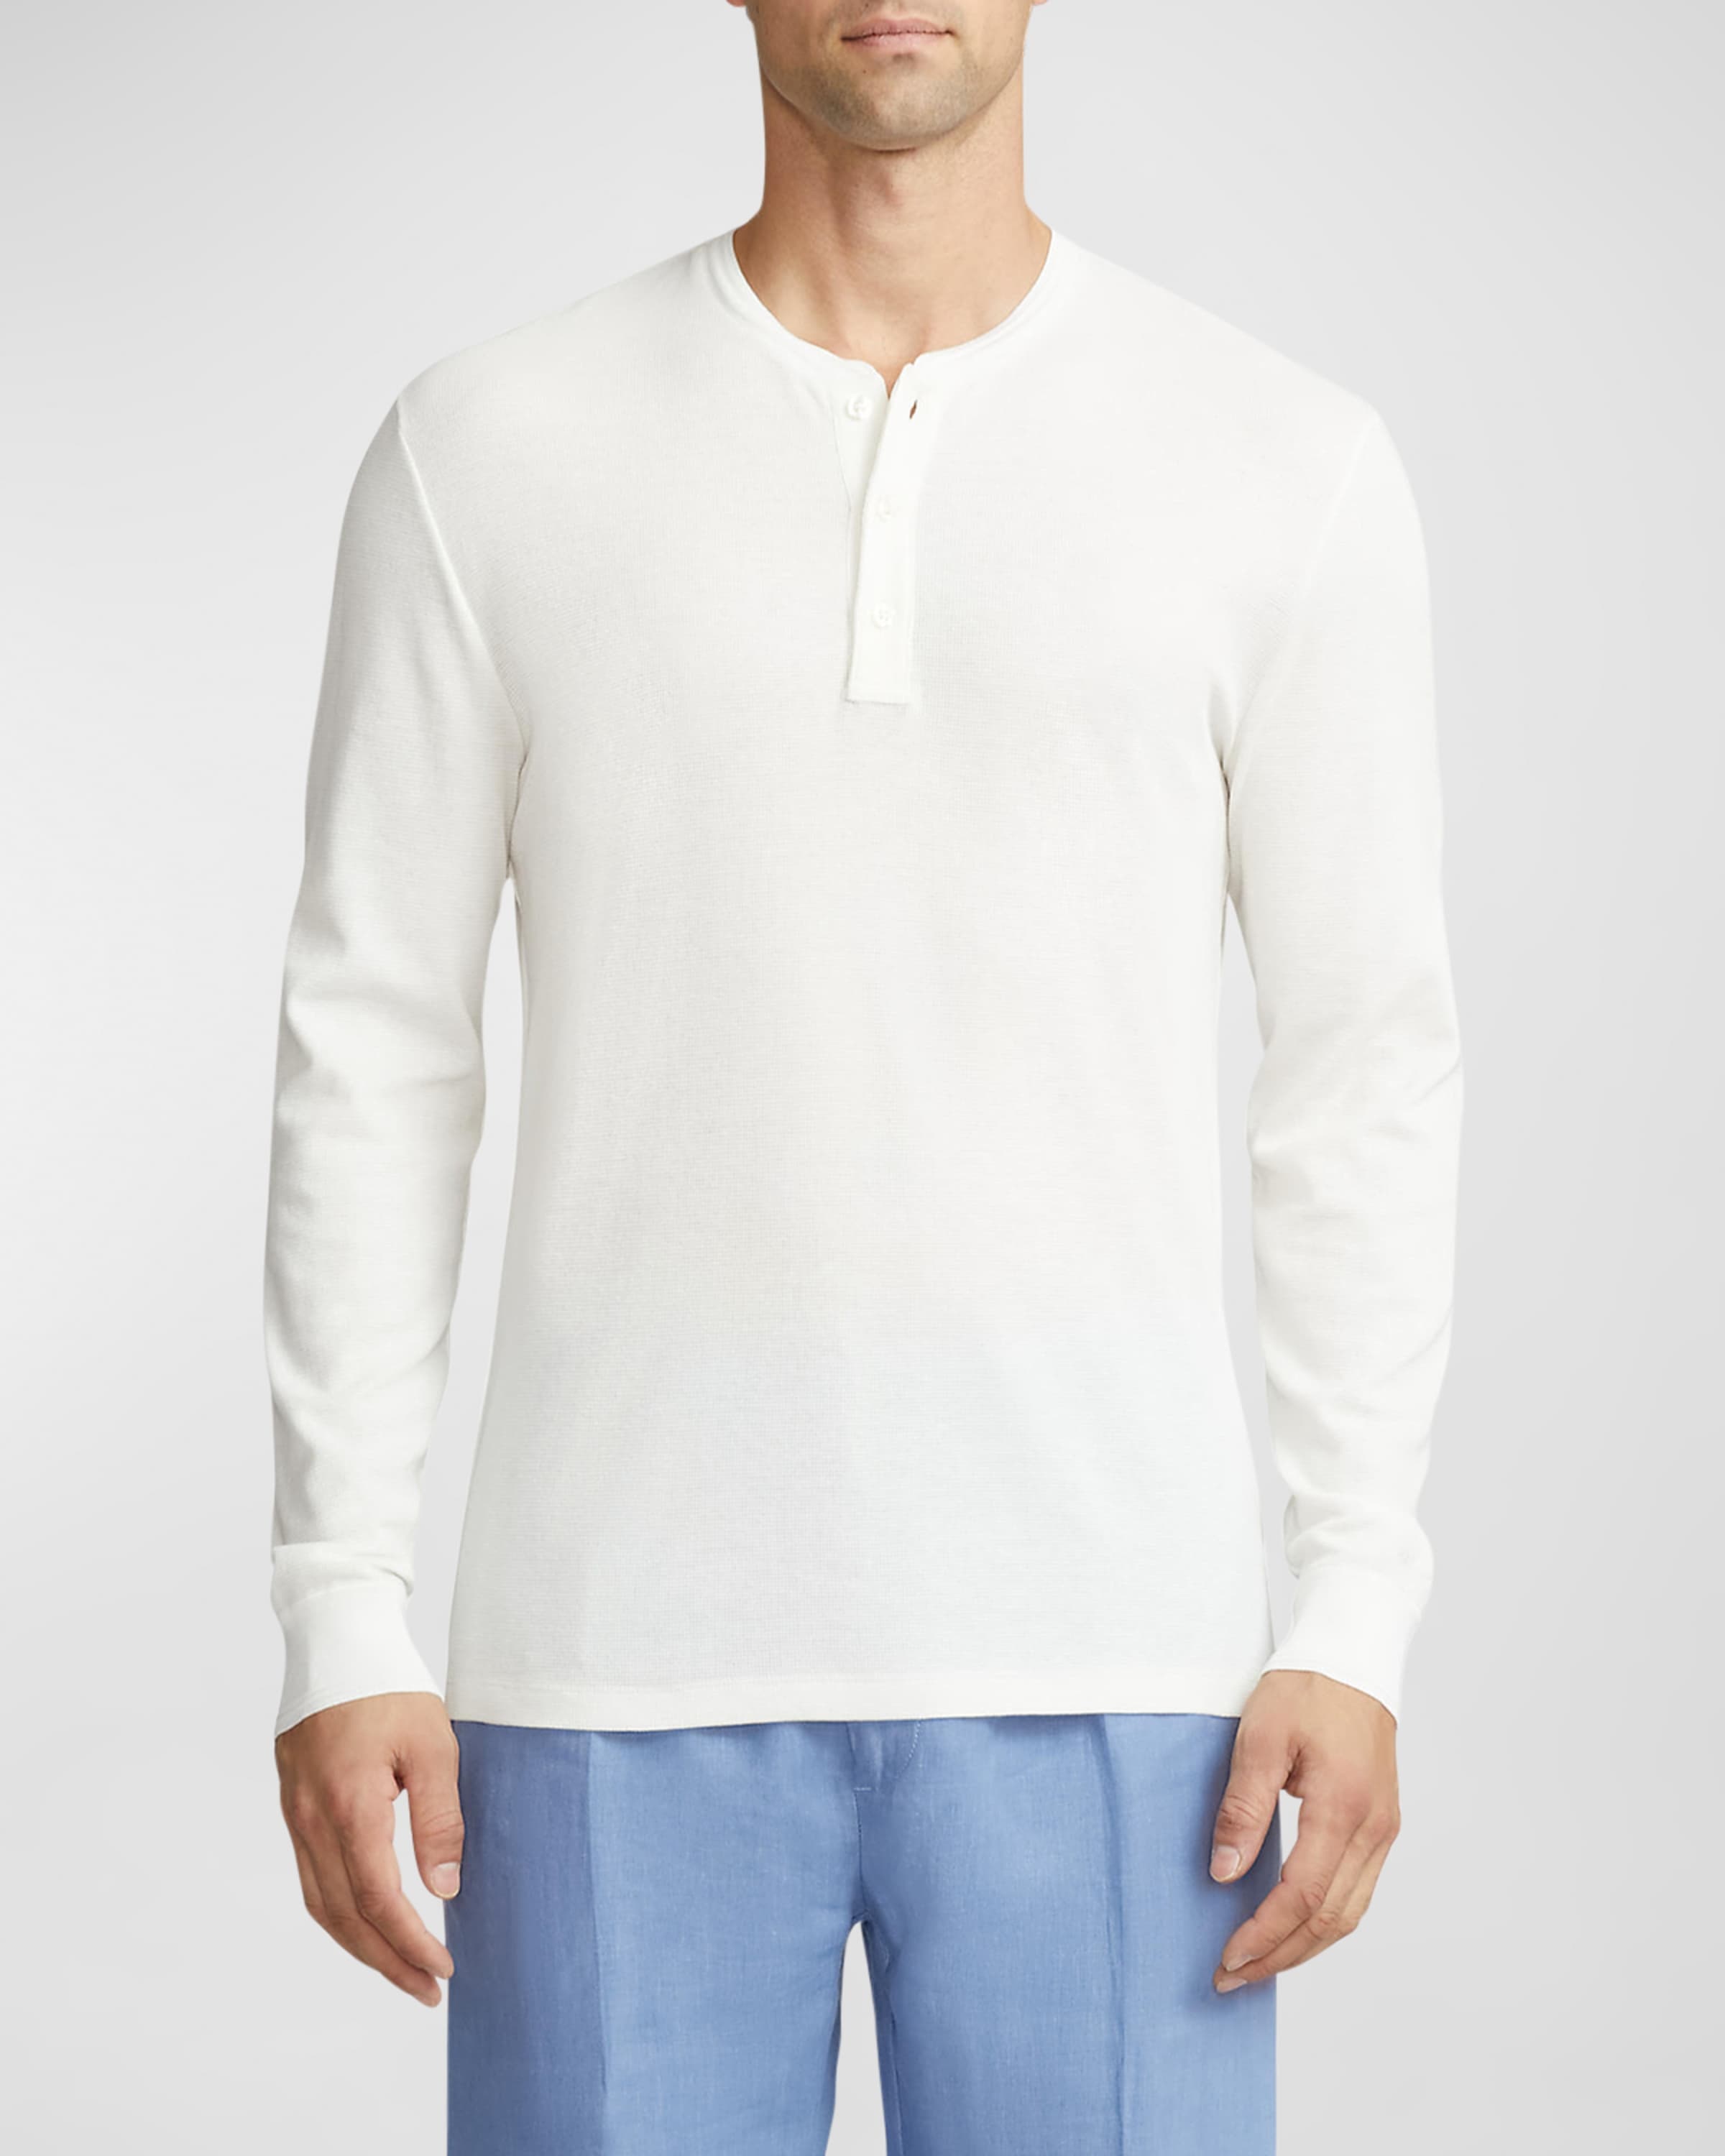 Men's Cotton and Mulberry Silk Henley Shirt - 2